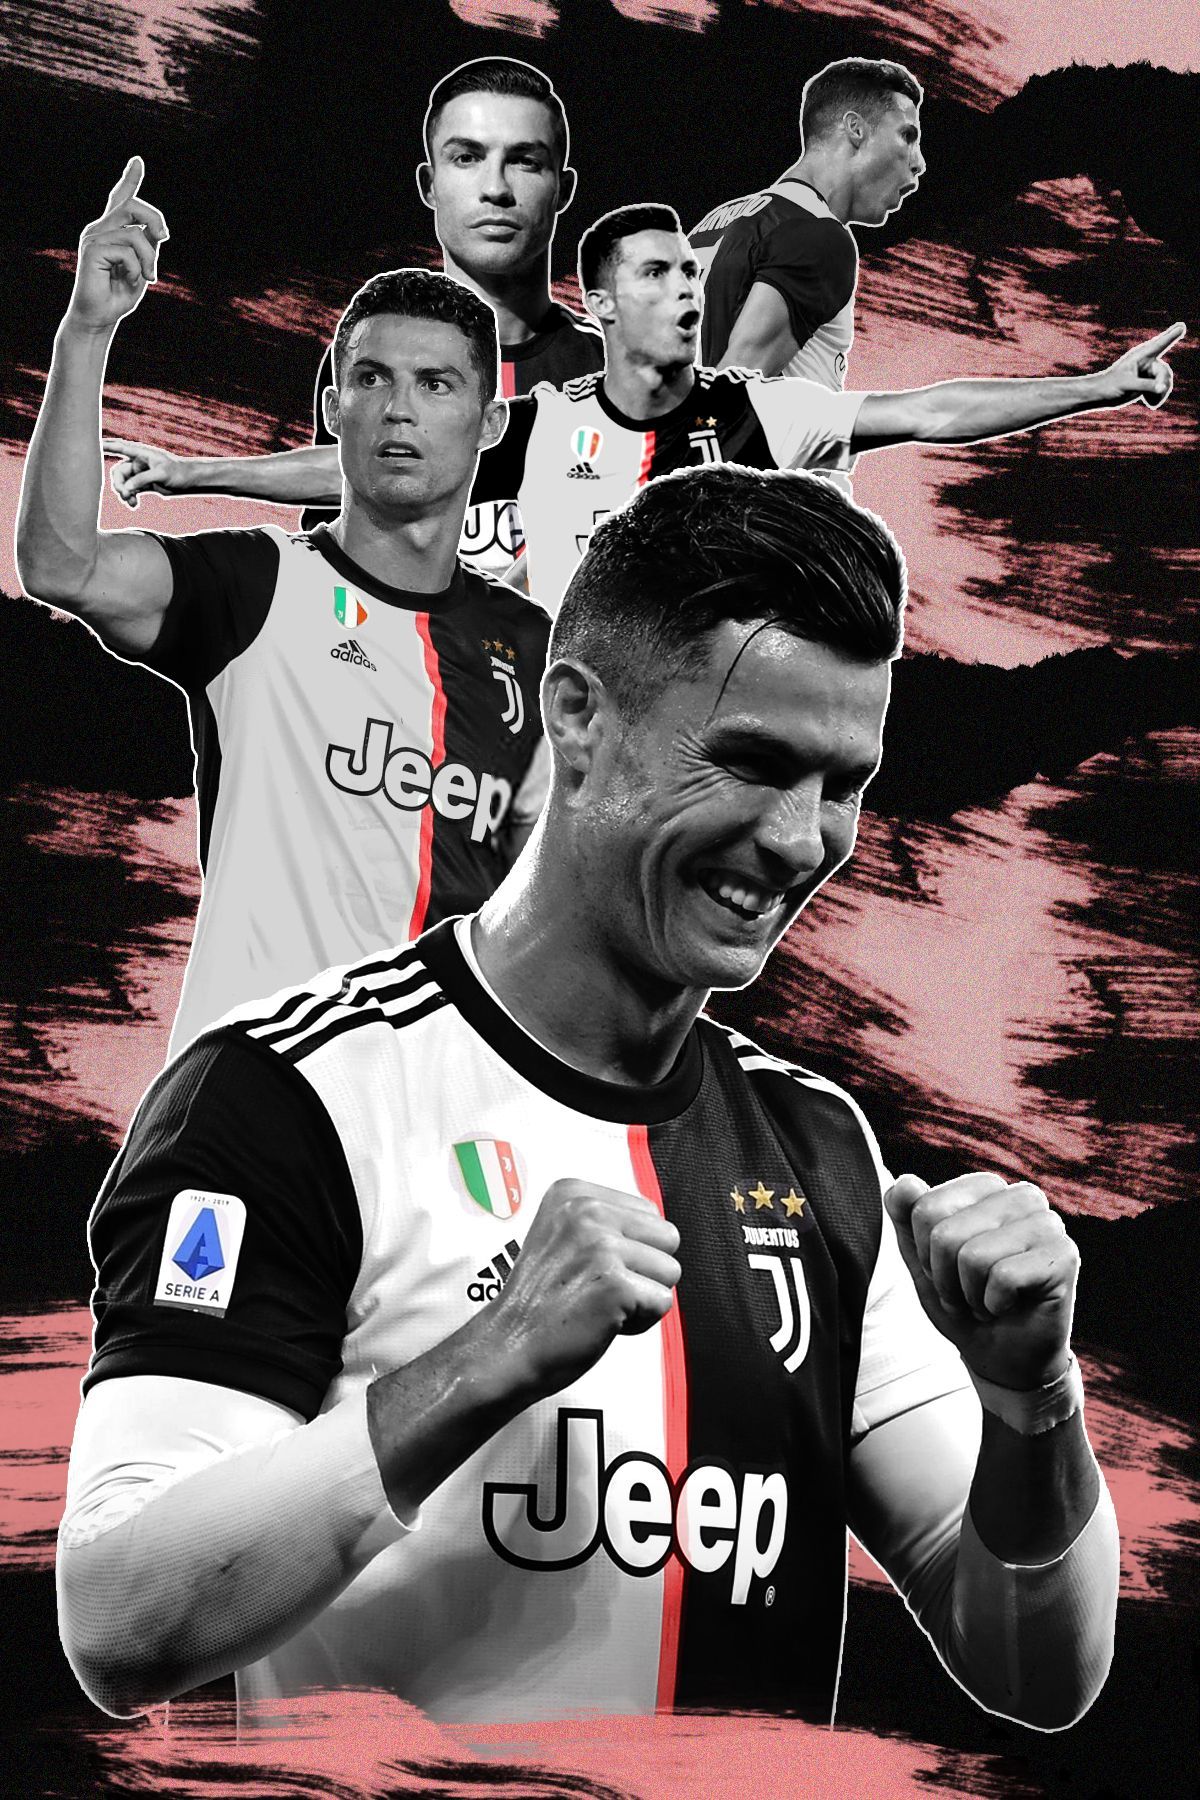 Ronaldo 2020 Wallpapers